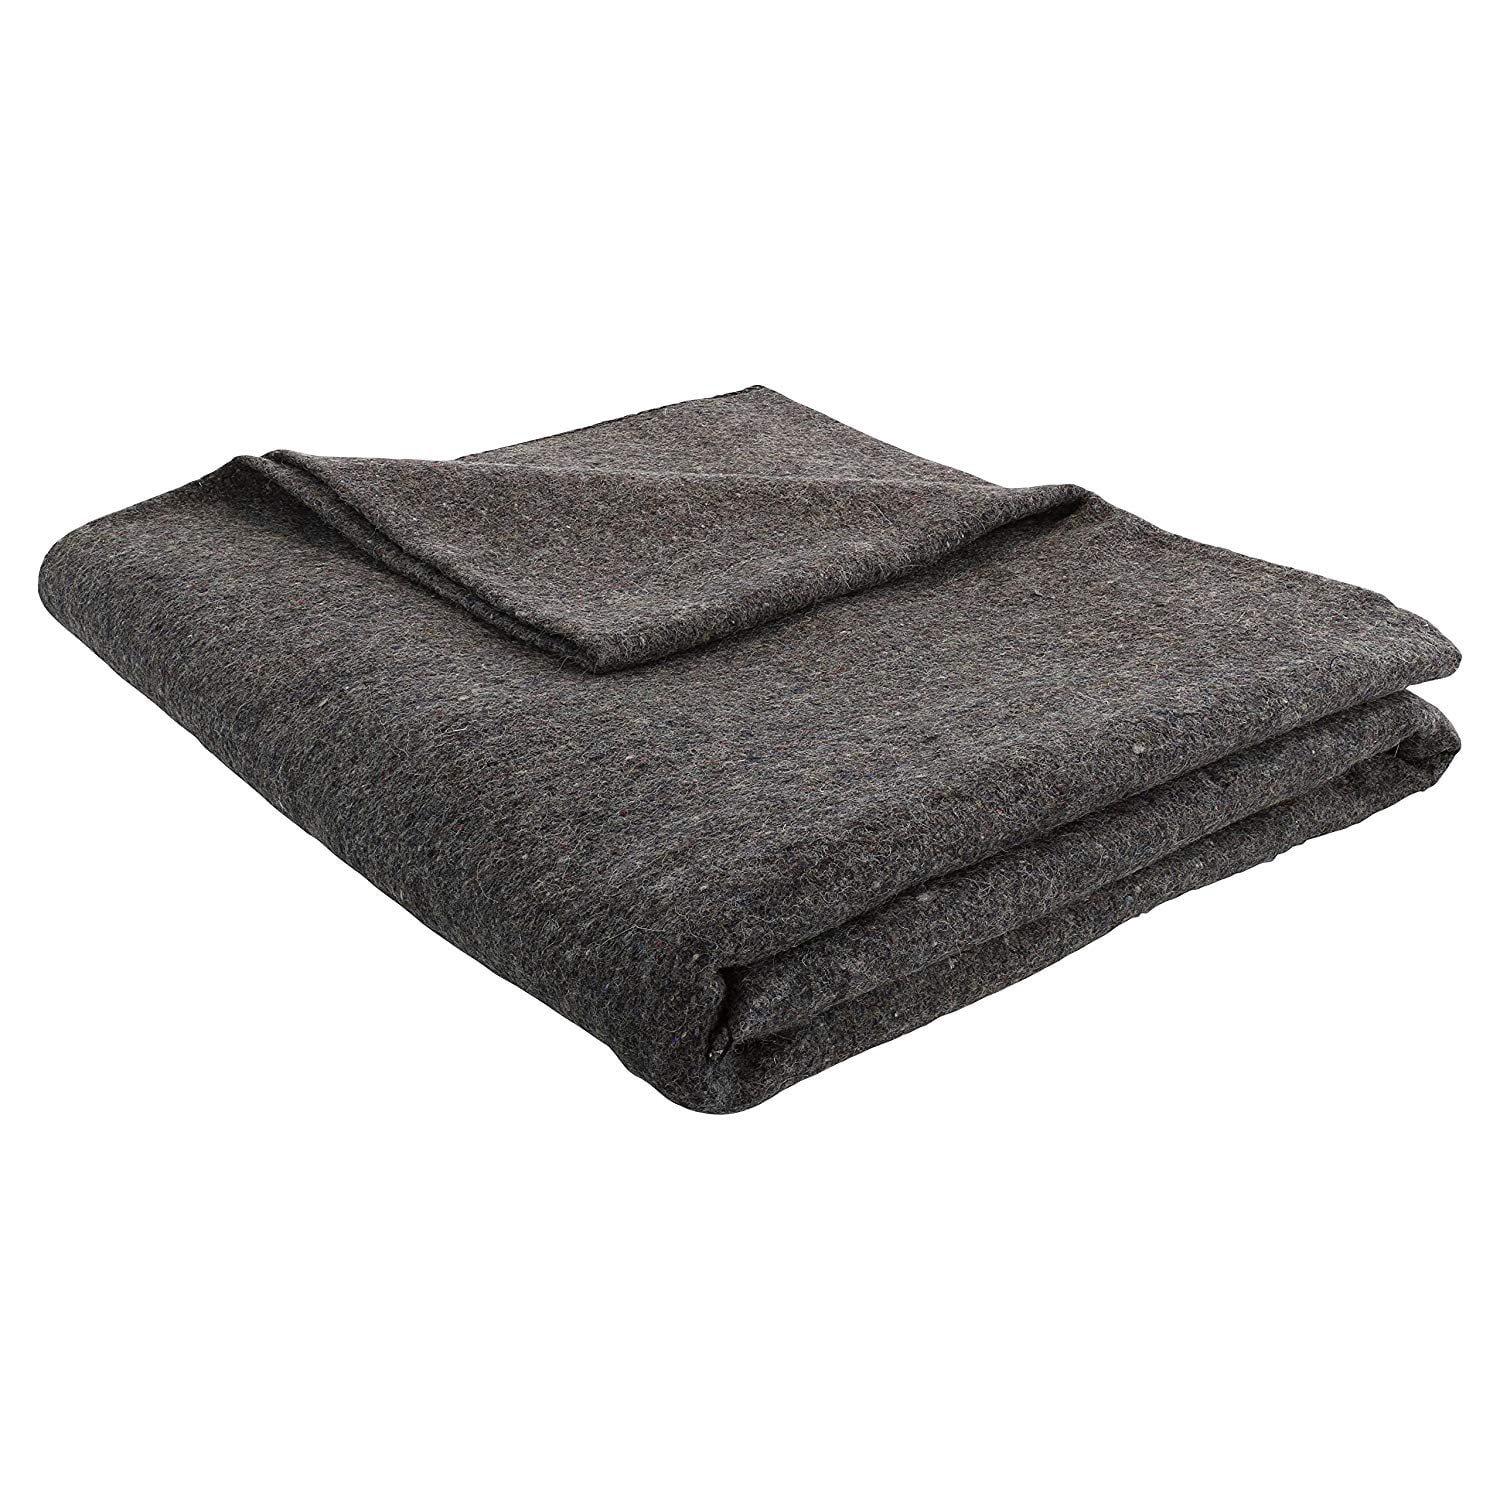 Wool Emergency Utility Blanket Gray 51" x 80" 50% Wool Blend Military Style NEW 